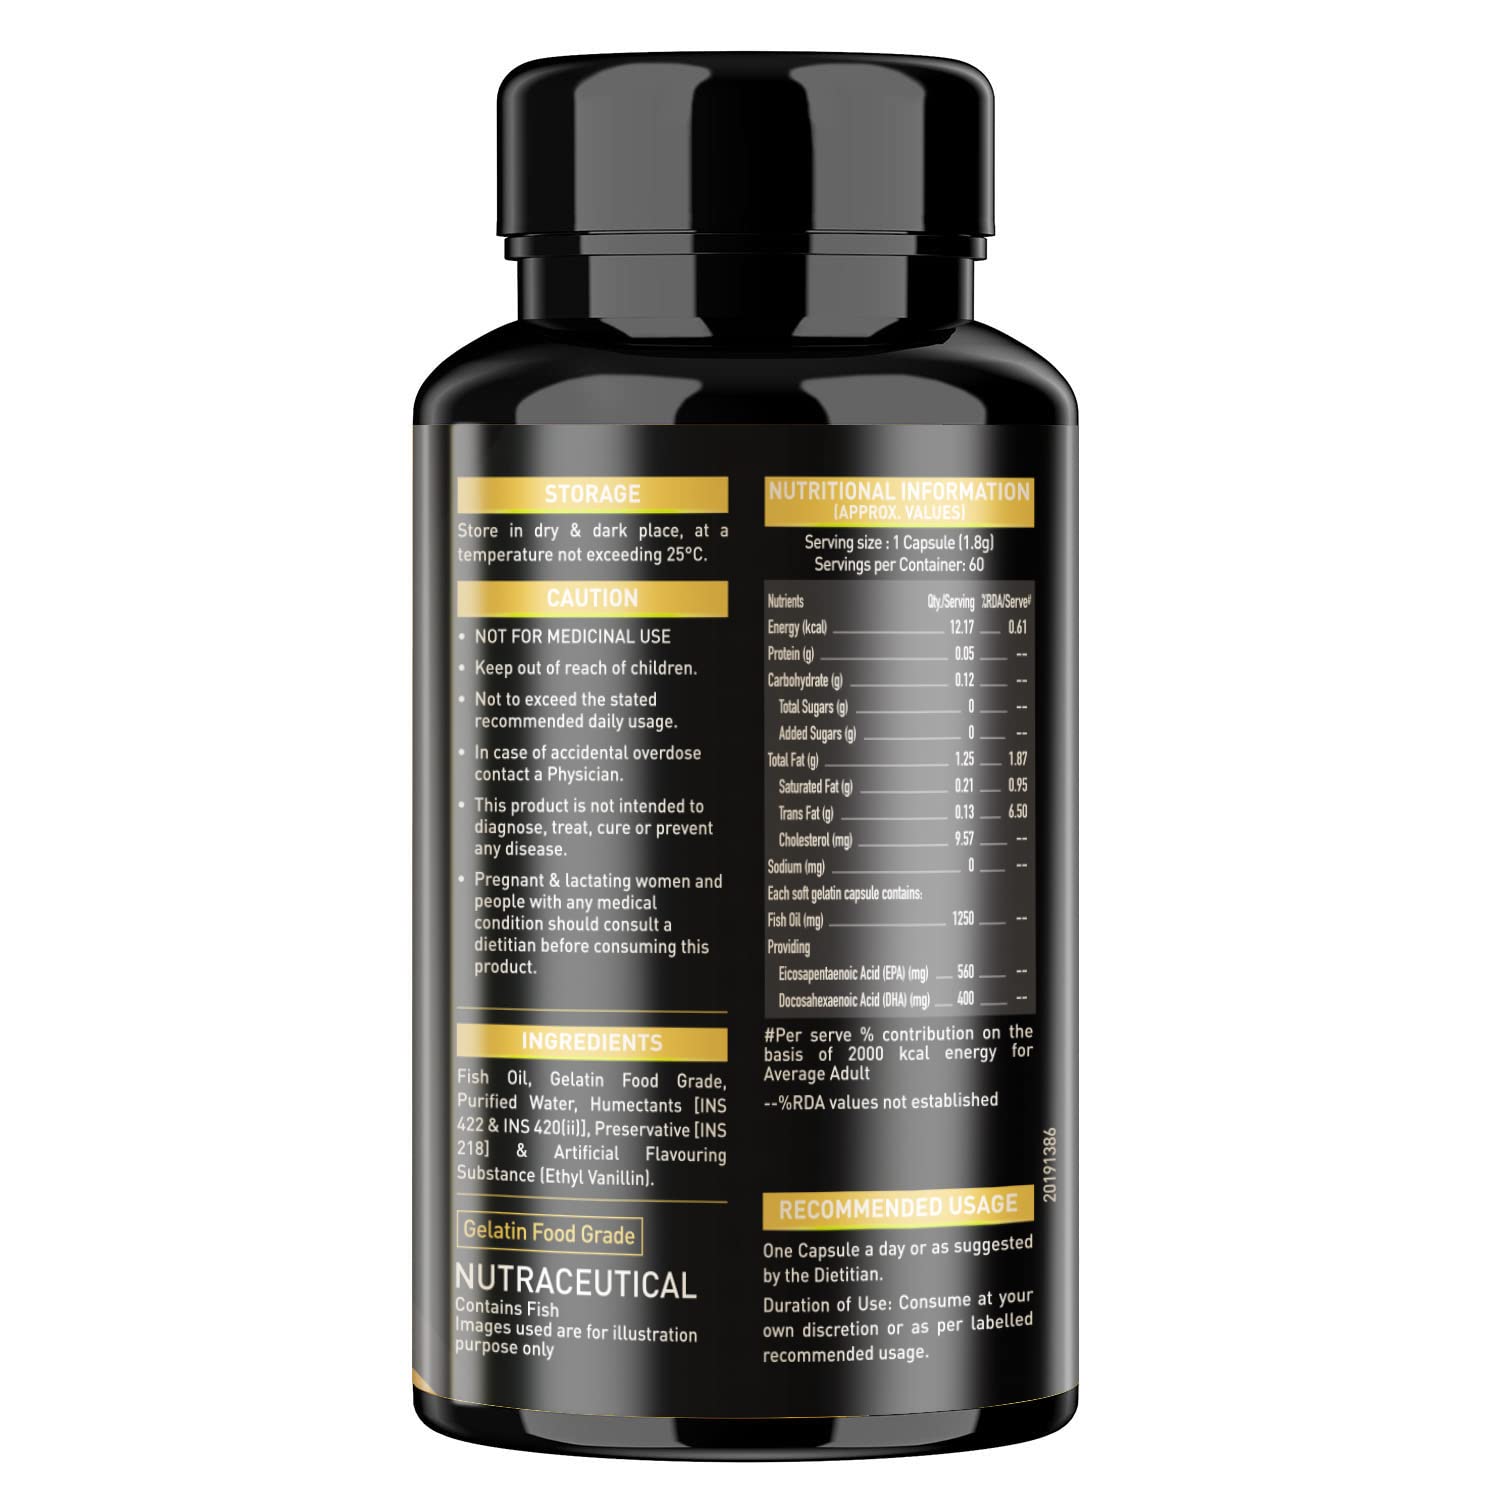 MuscleBlaze Fish Oil Gold Soft Gelatin Capsule (60 Capsules)